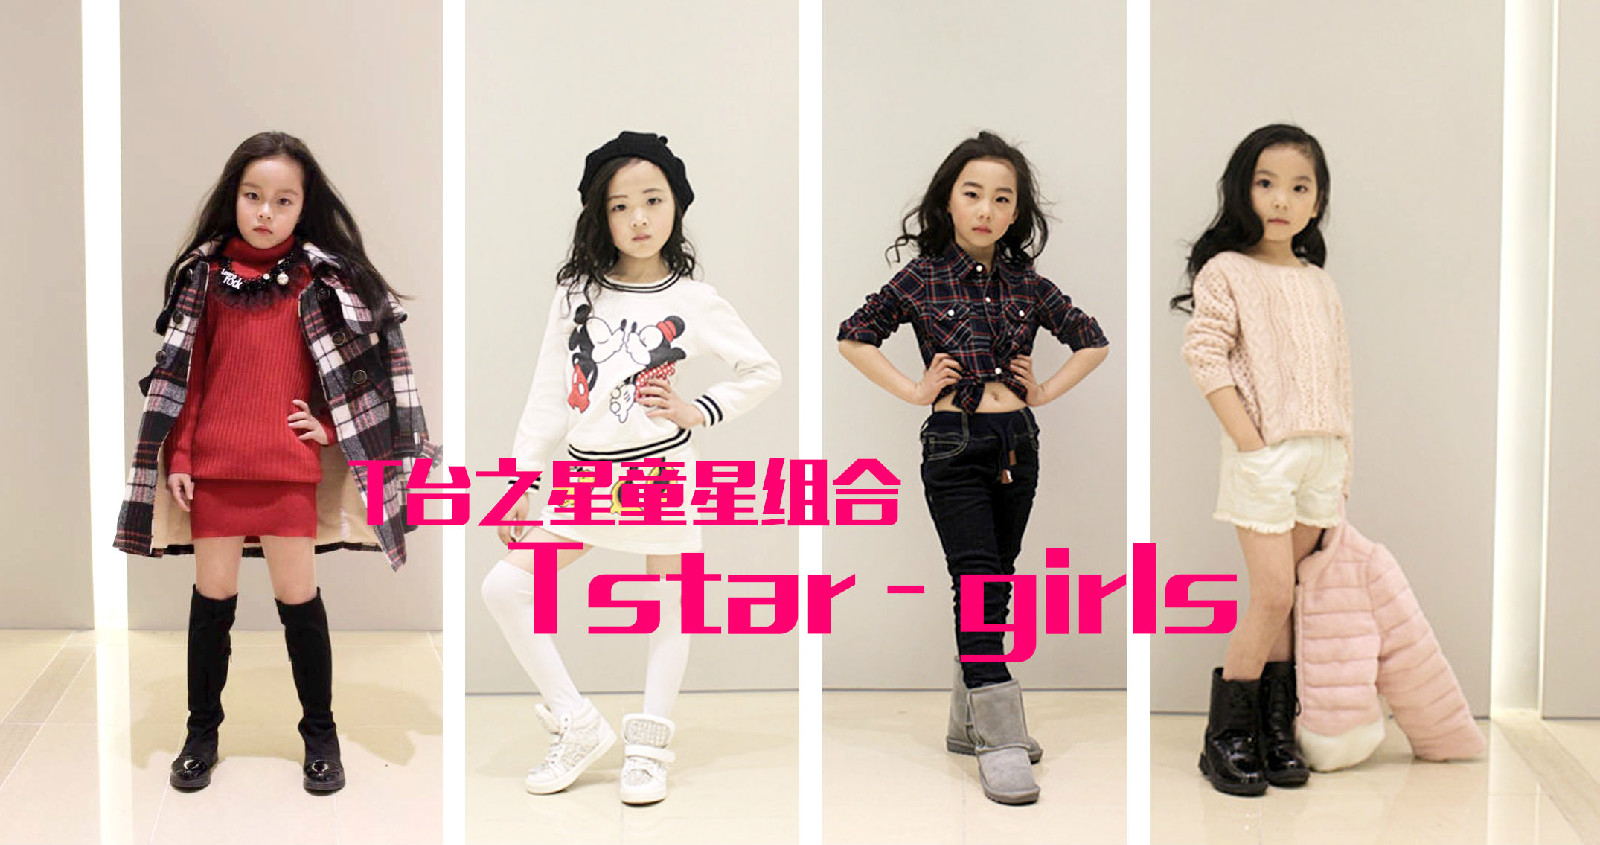 Tstar—girls